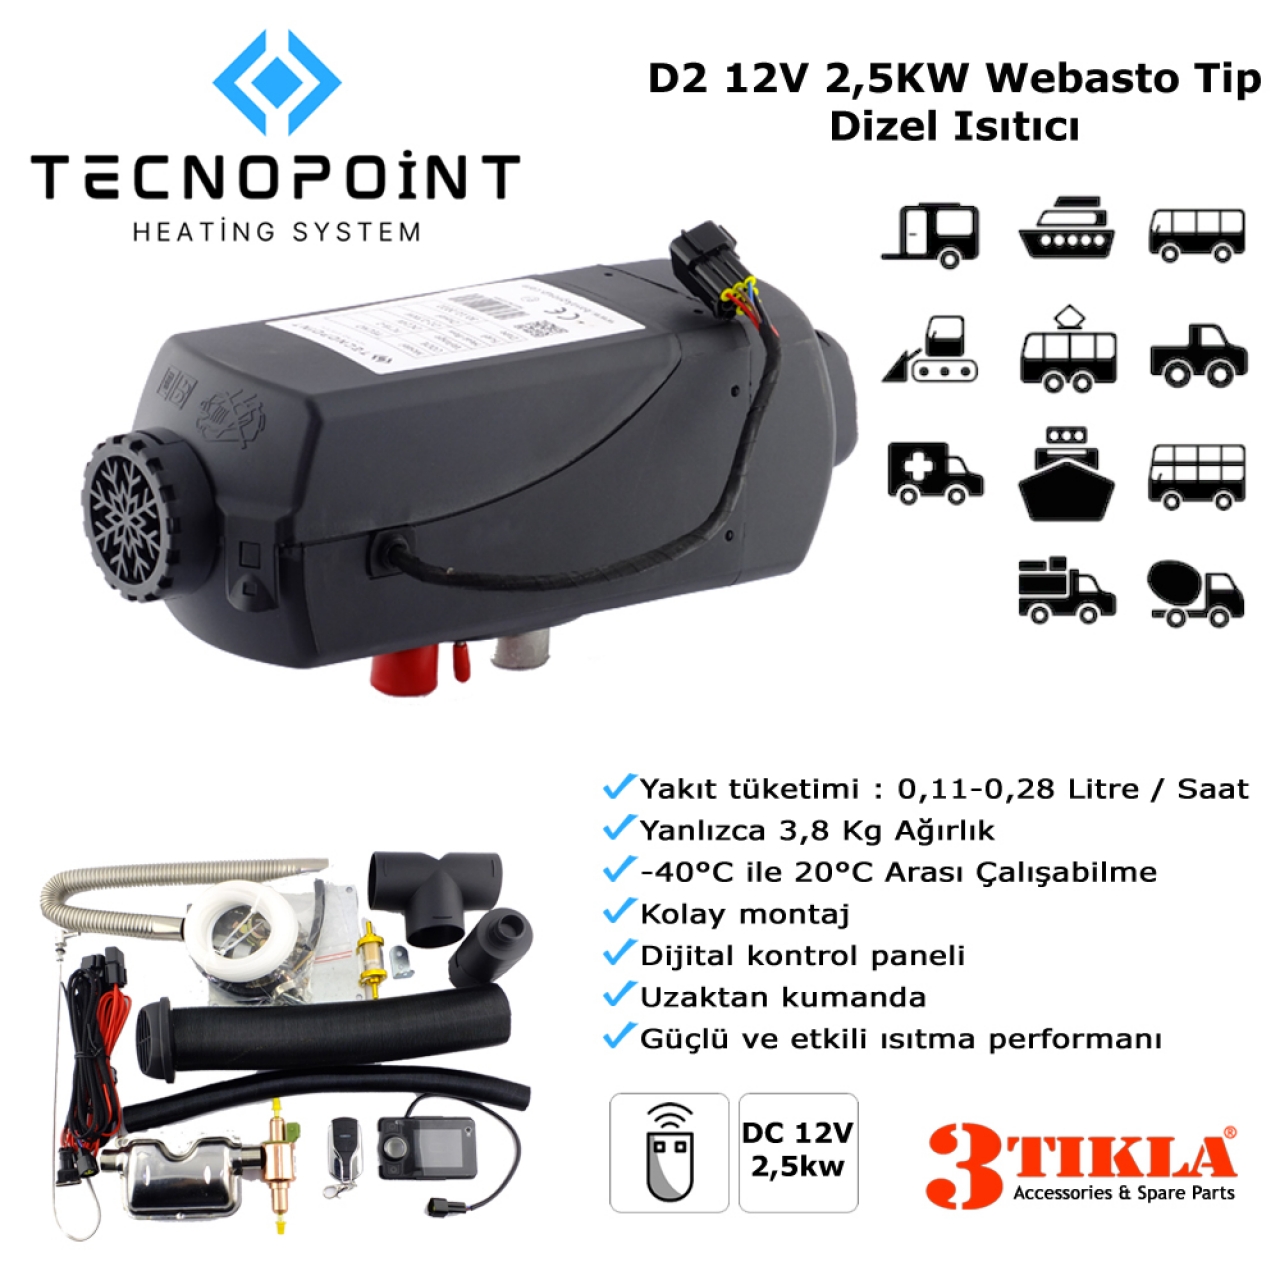 Tecnopoint TC18-01 Webasto Tip D2 Model Dizel Isıtıcı 12V 2,5KW Karavan, Minibüs, Tekne, Panelvan Uyumlu